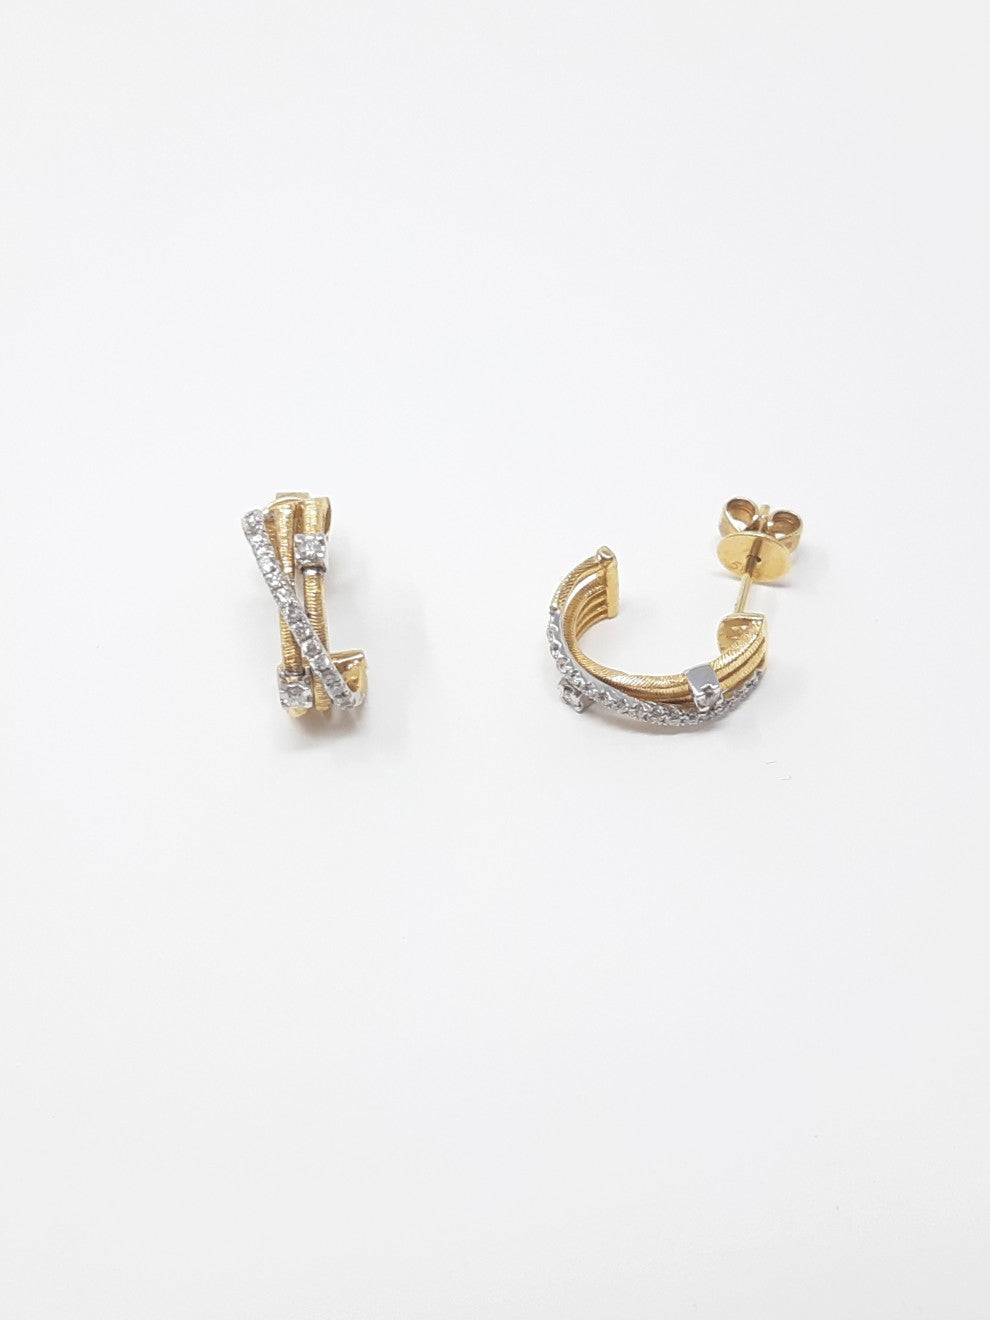 14K Yellow Gold 0.23cttw Diamond Earrings